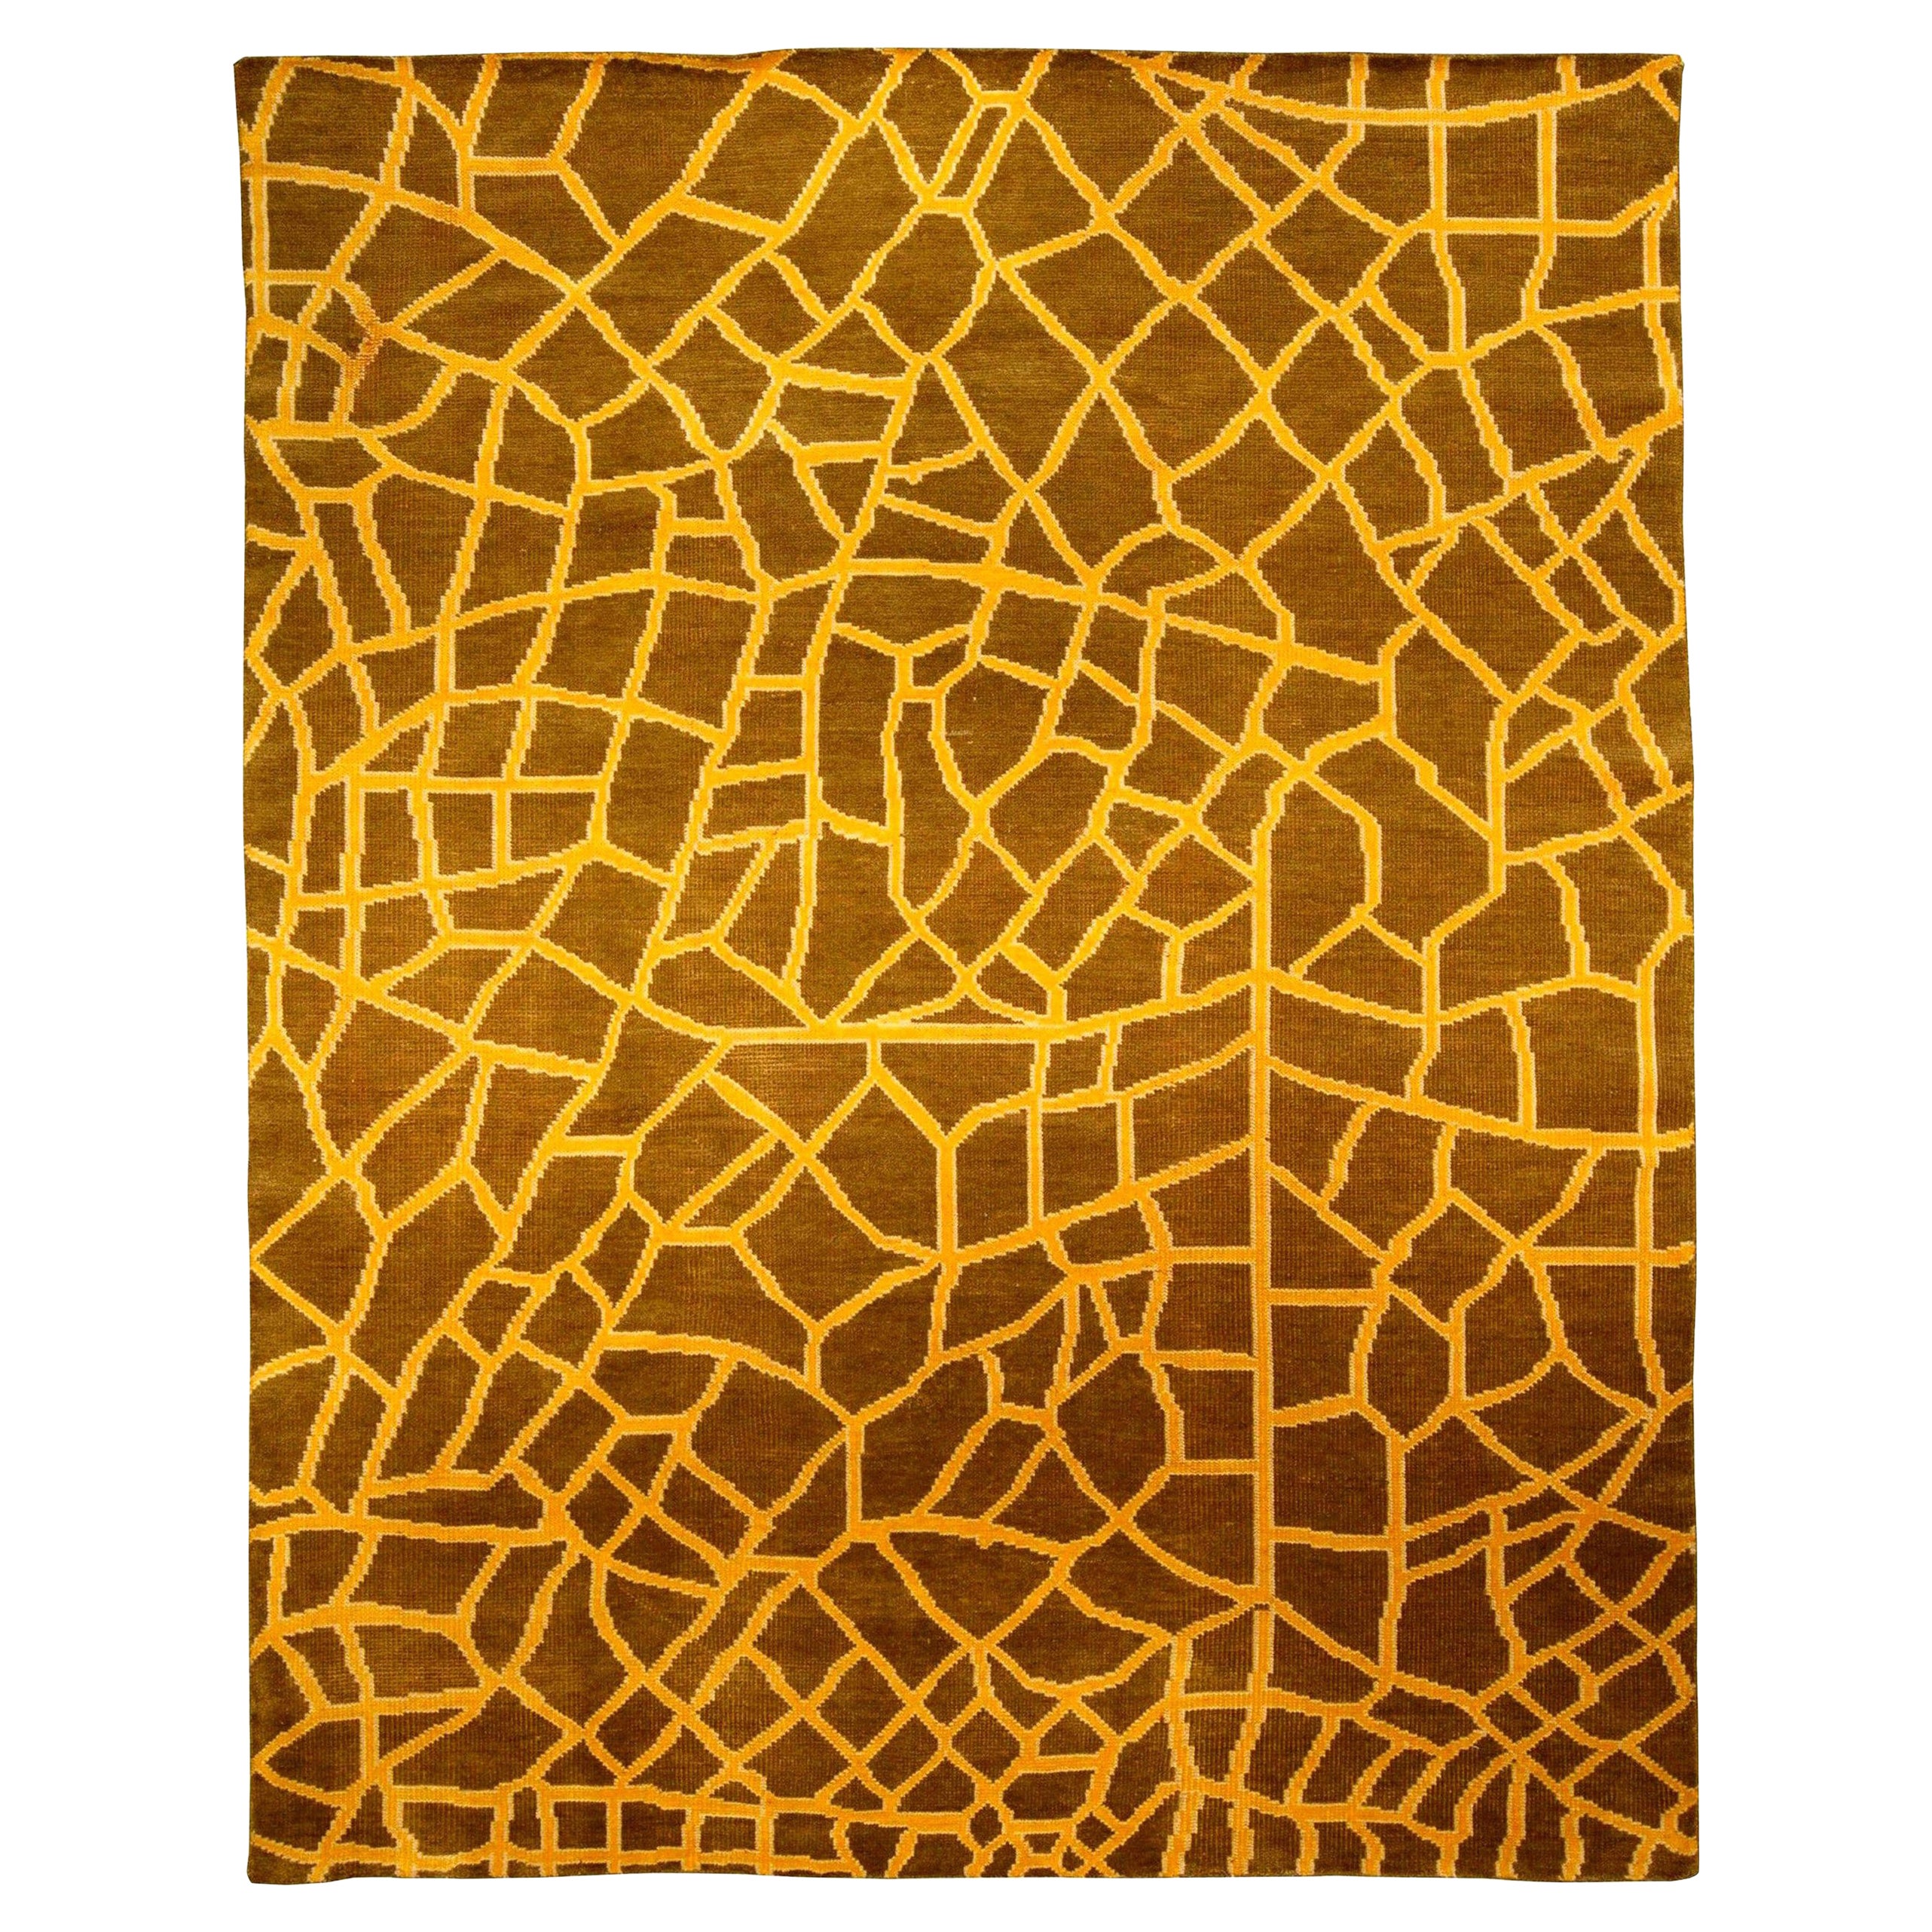 Contemporary Abstract Snake Skin Handmade Wool Rug by Doris Leslie Blau